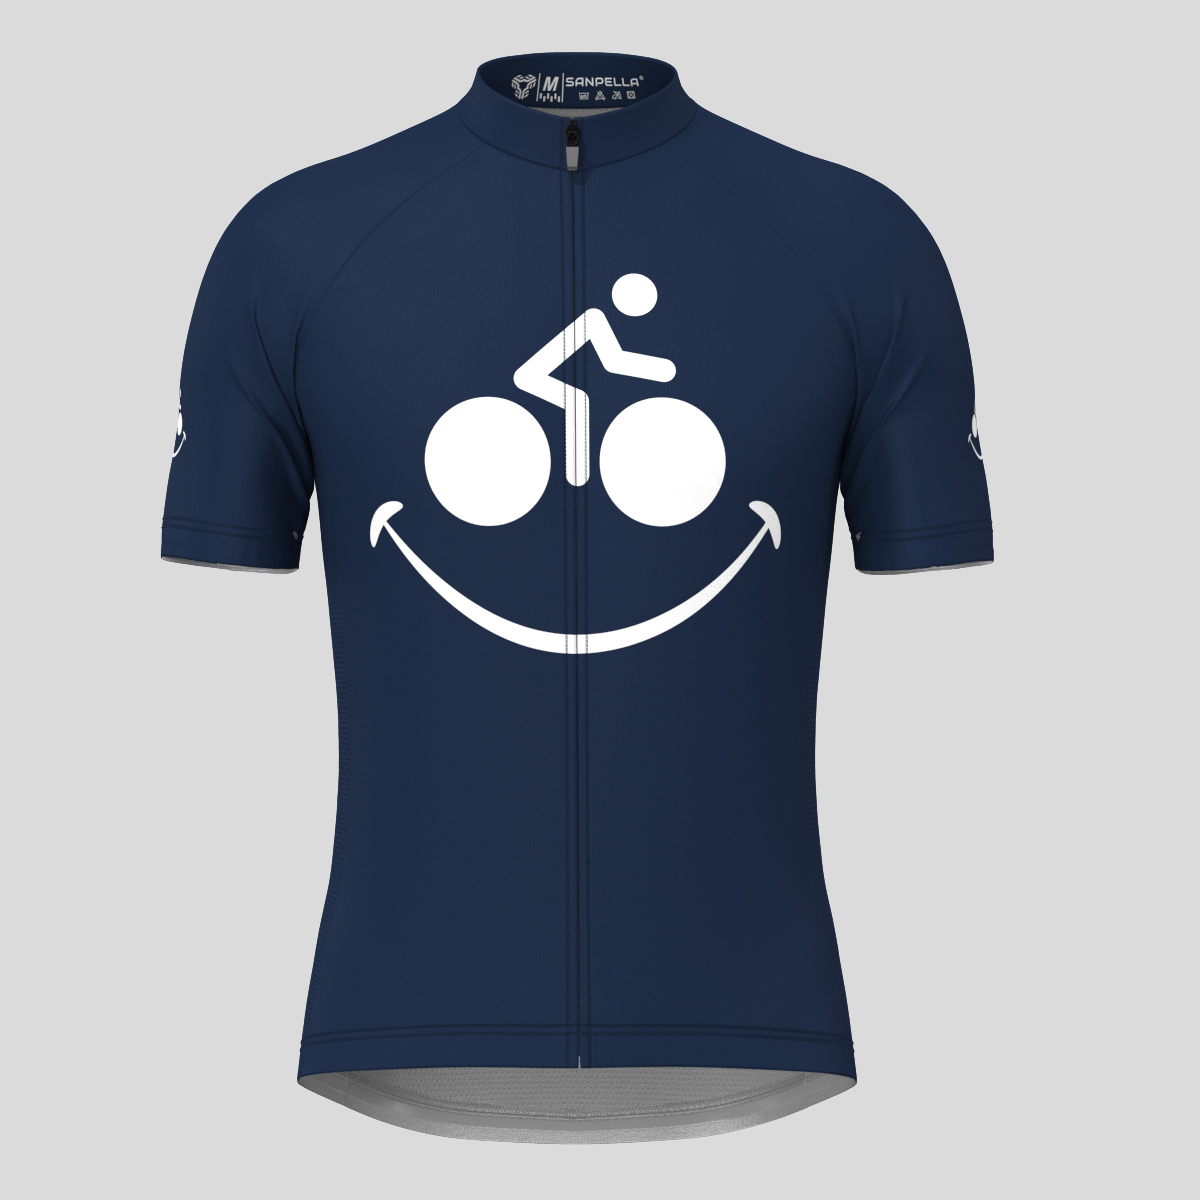 Bike Smile Men's Cycling Jersey - Navy